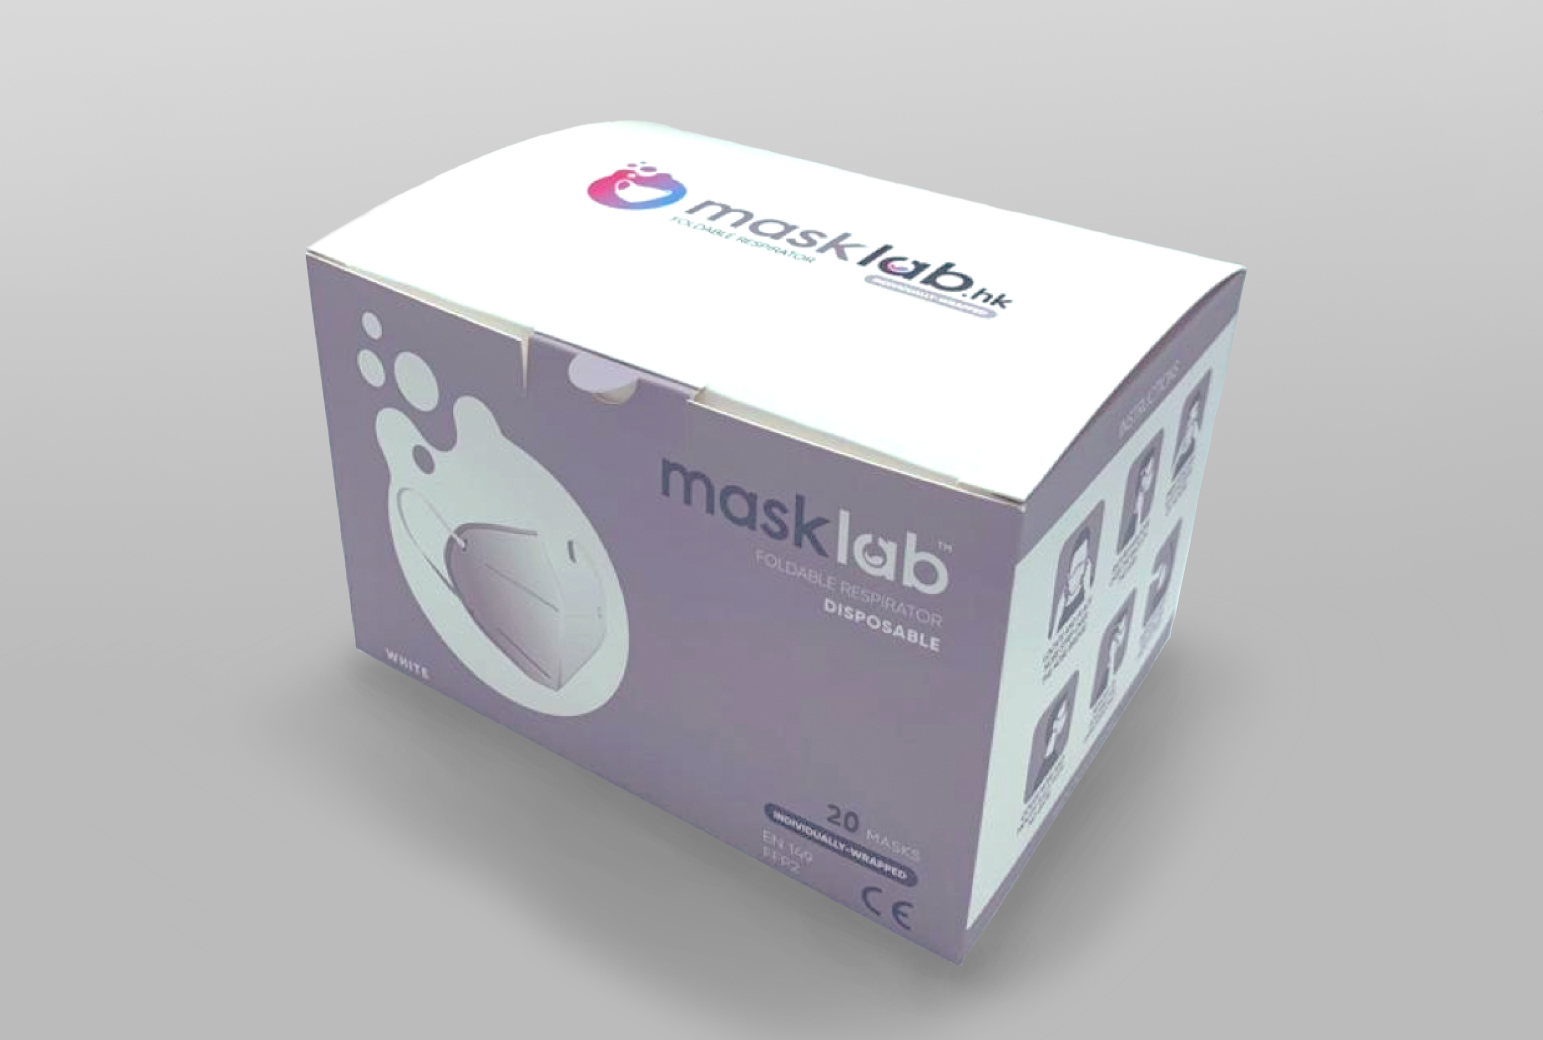 immagine scatola da 20 mascherine FFP2 Mask Lab